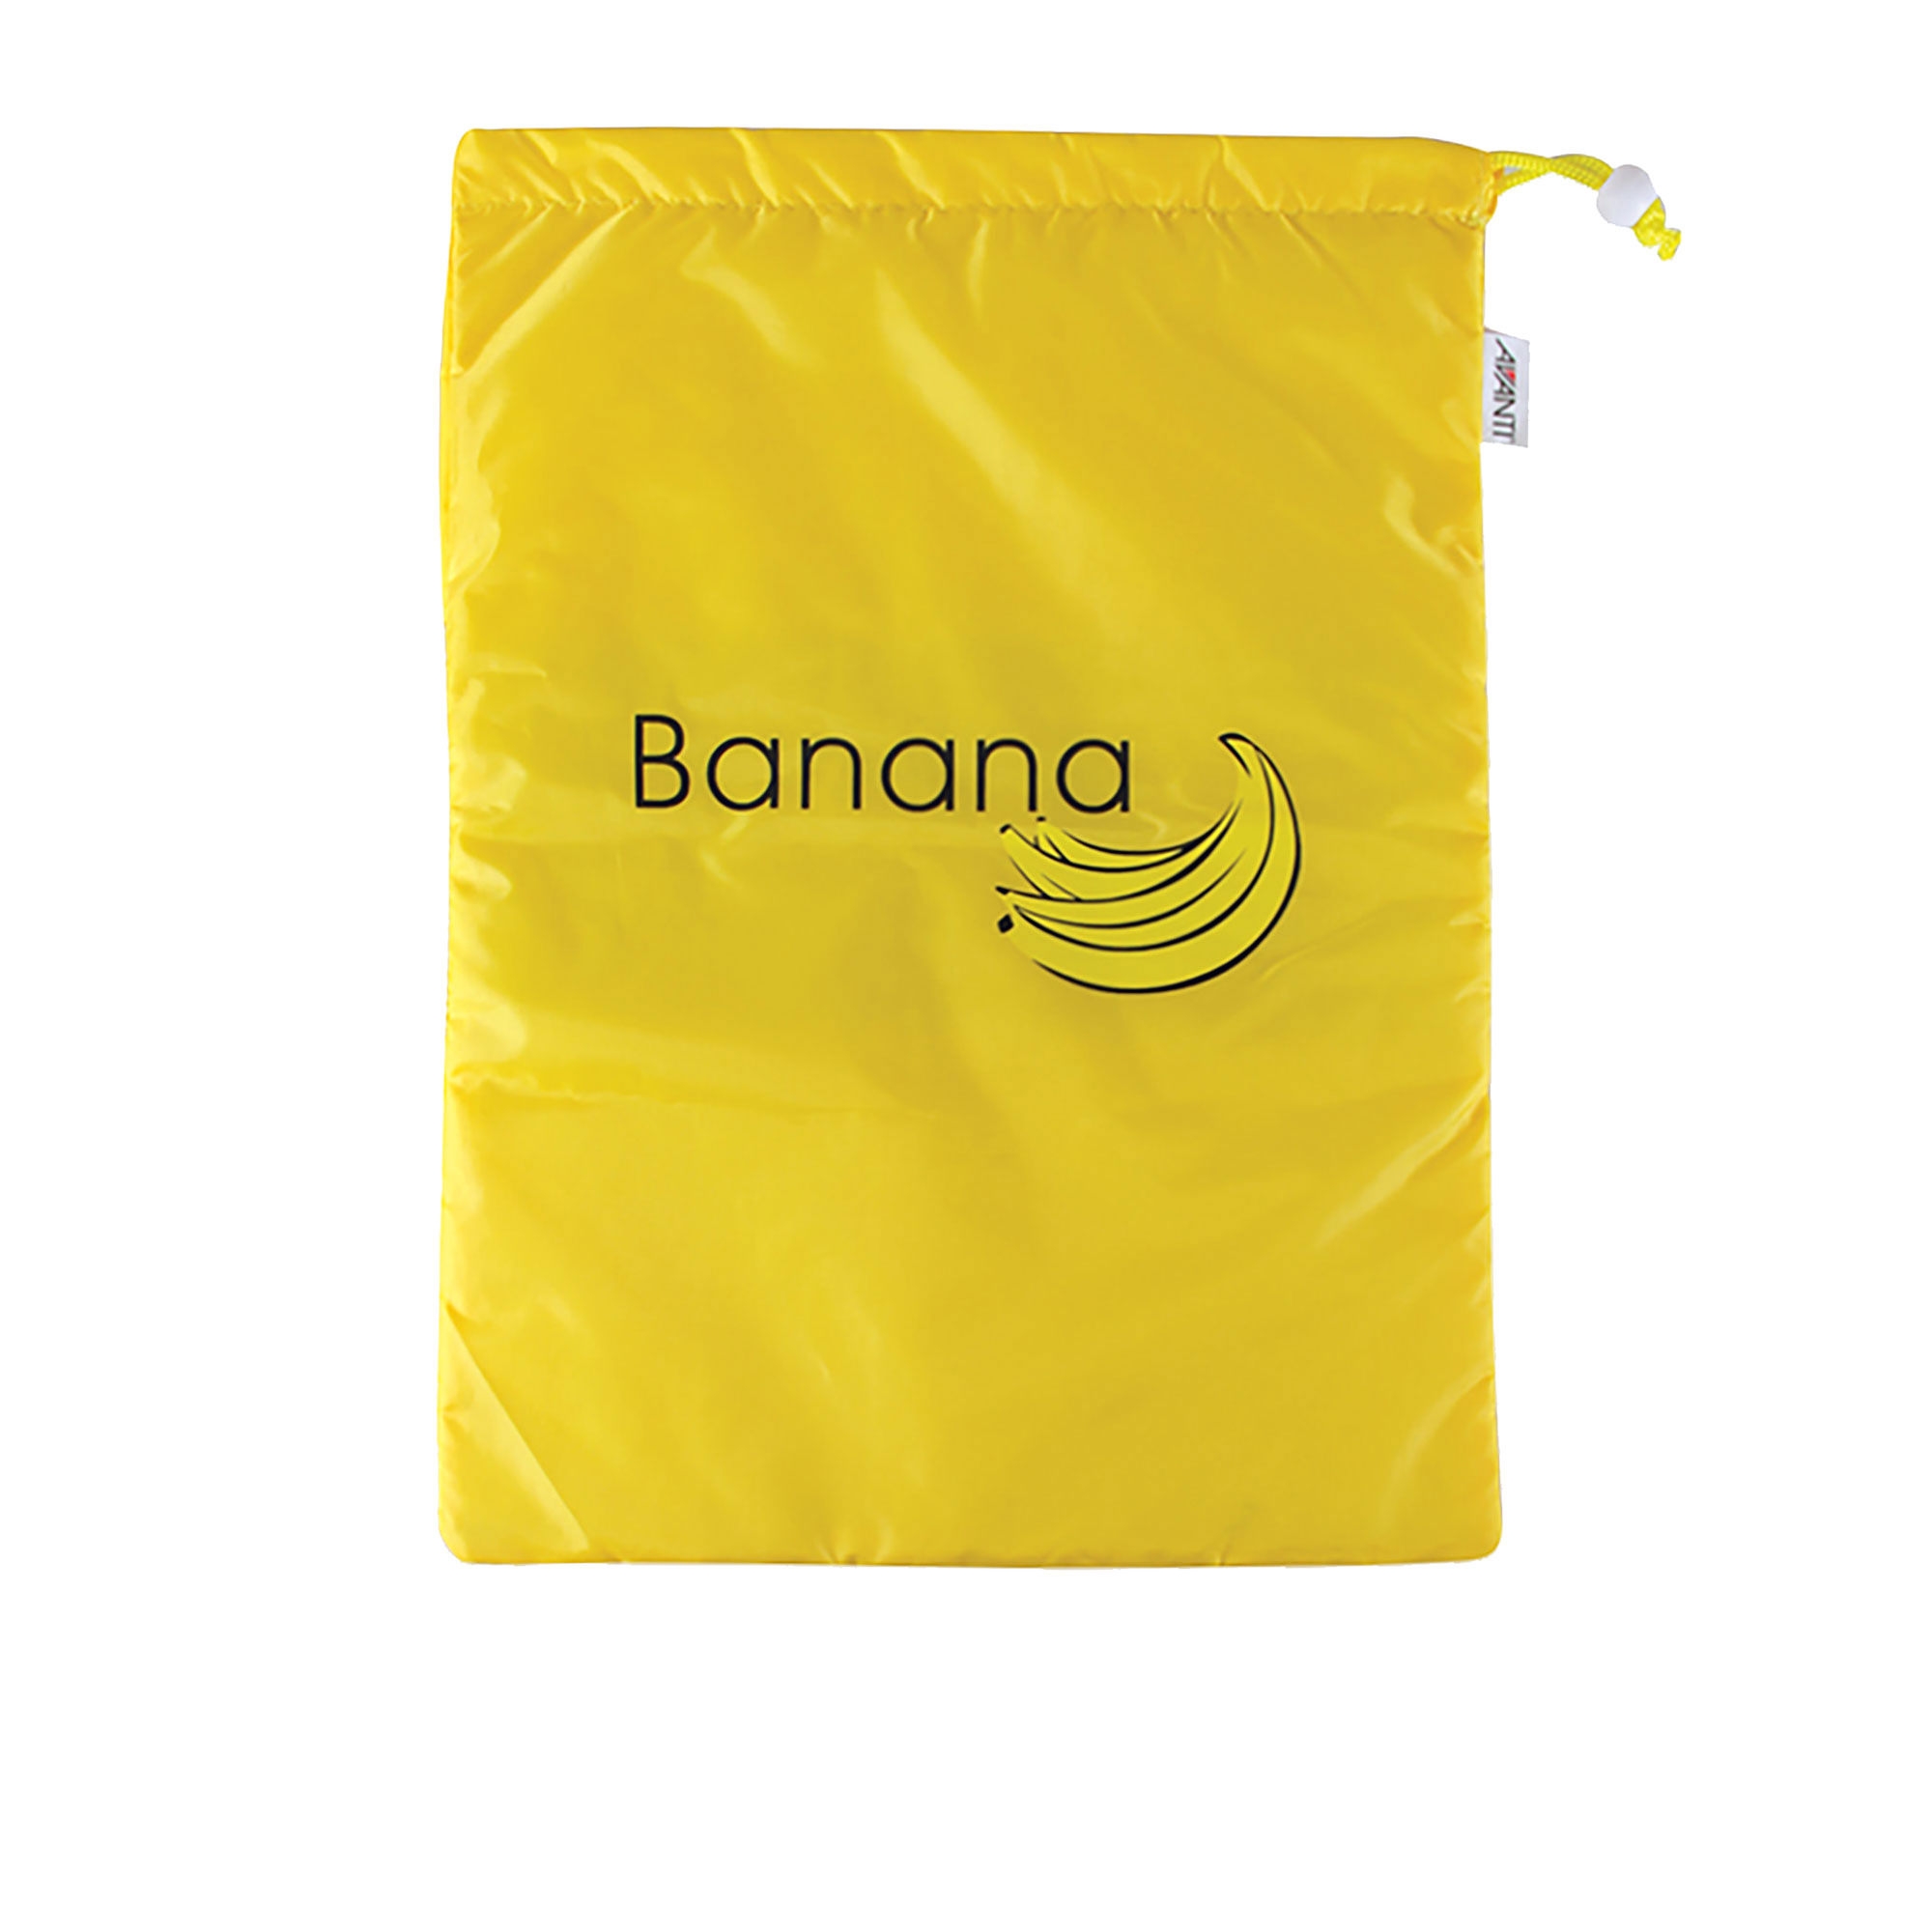 Avanti Banana Bag Image 1